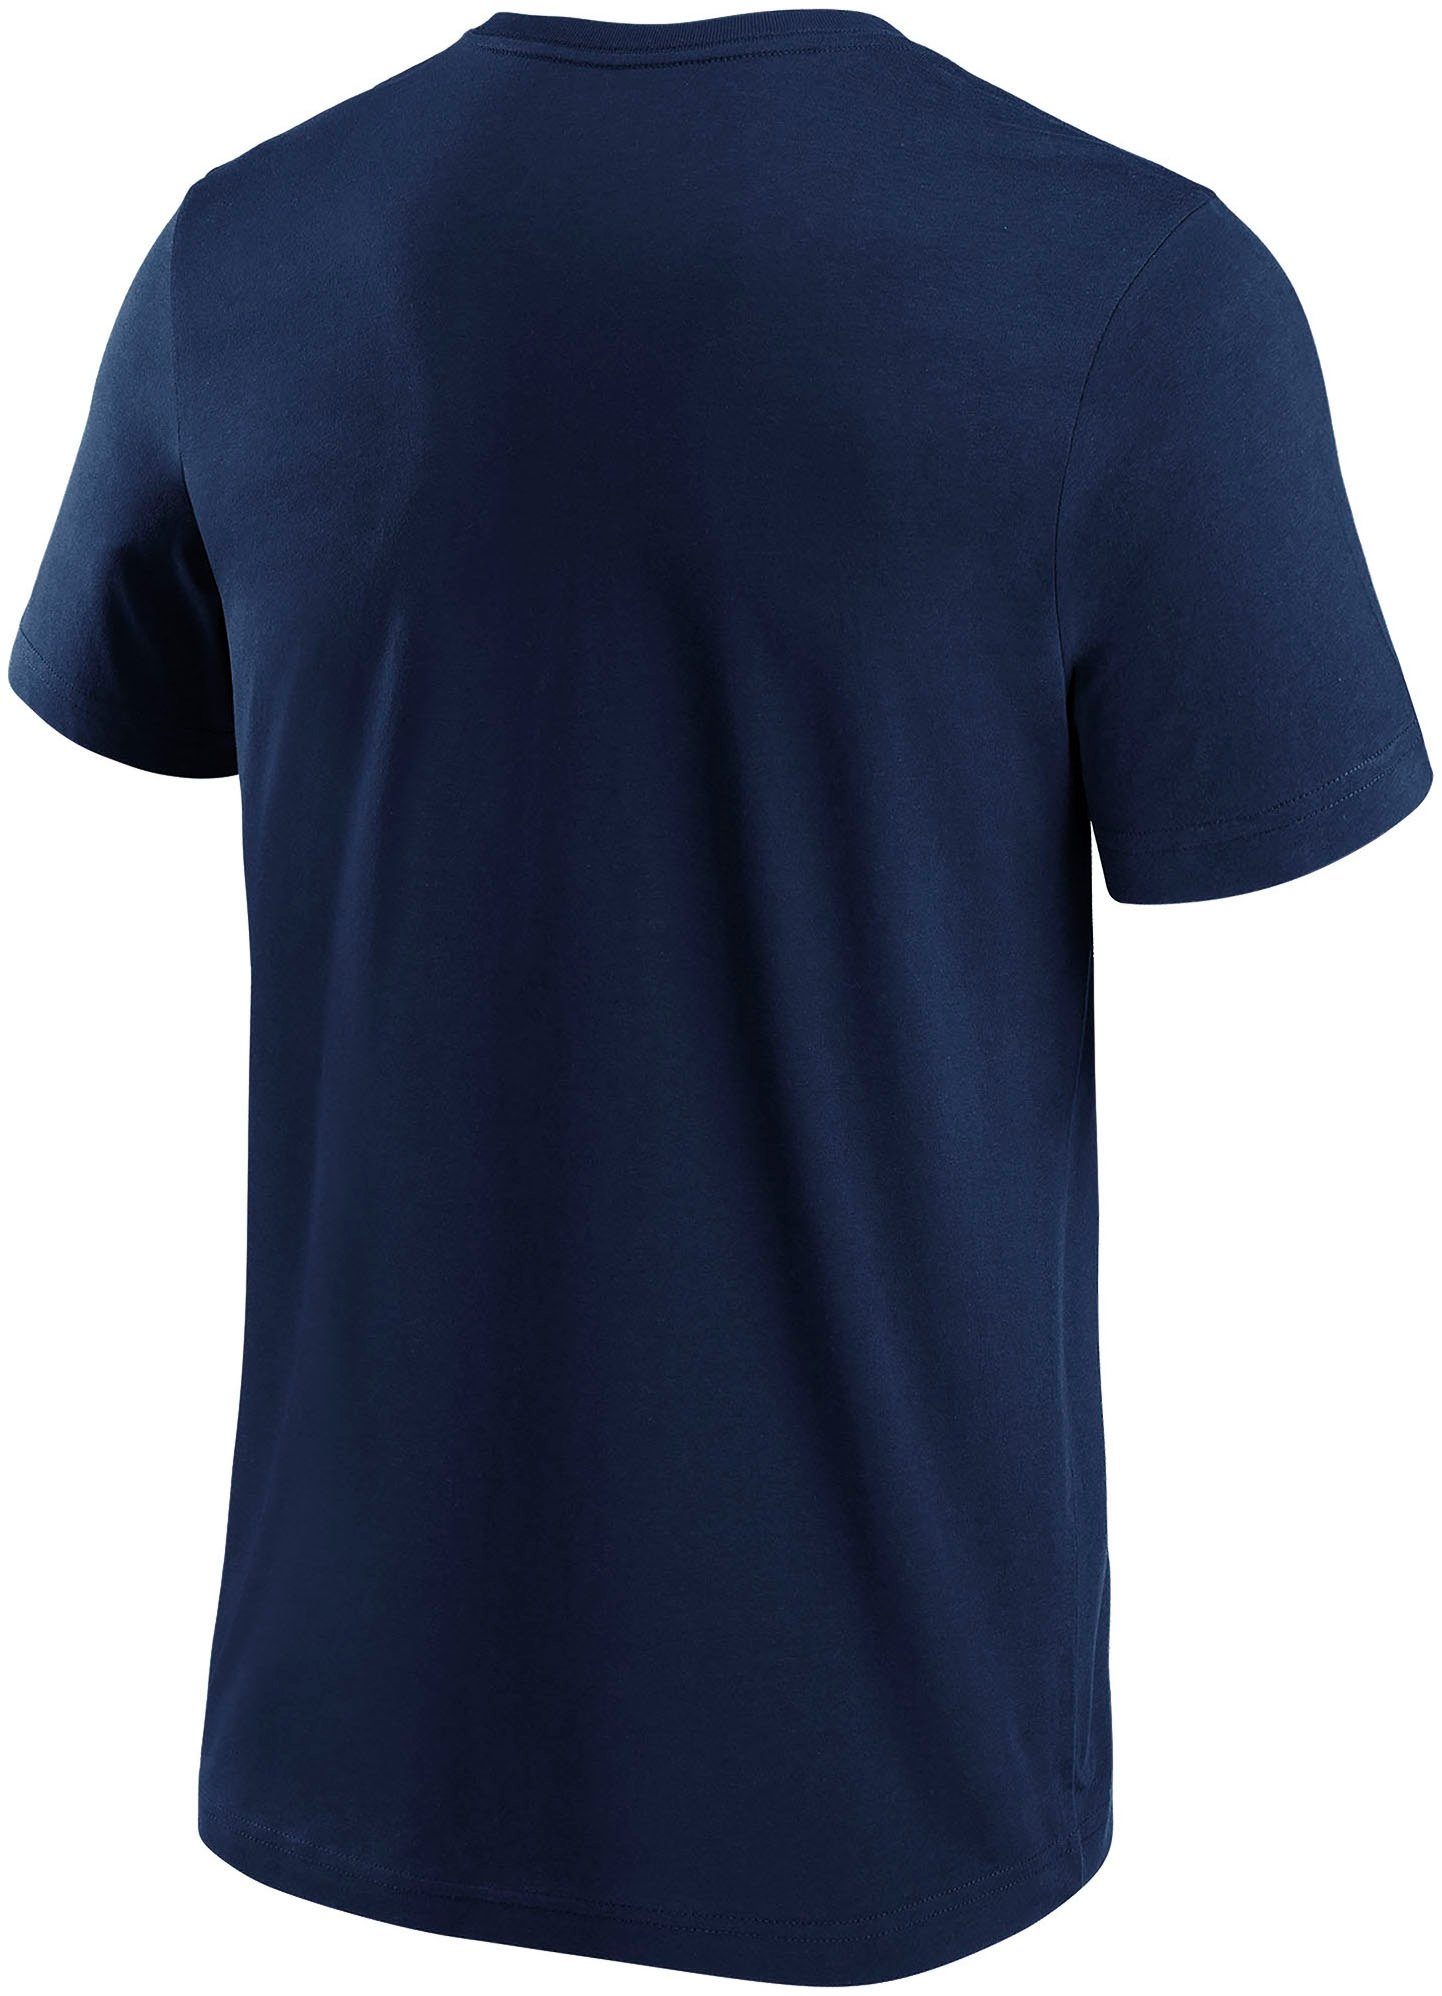 T-SHIRT PATRIOTS ENGLAND PRIMARY NFL GRAPHIC LOGO NEW T-Shirt Fanatics